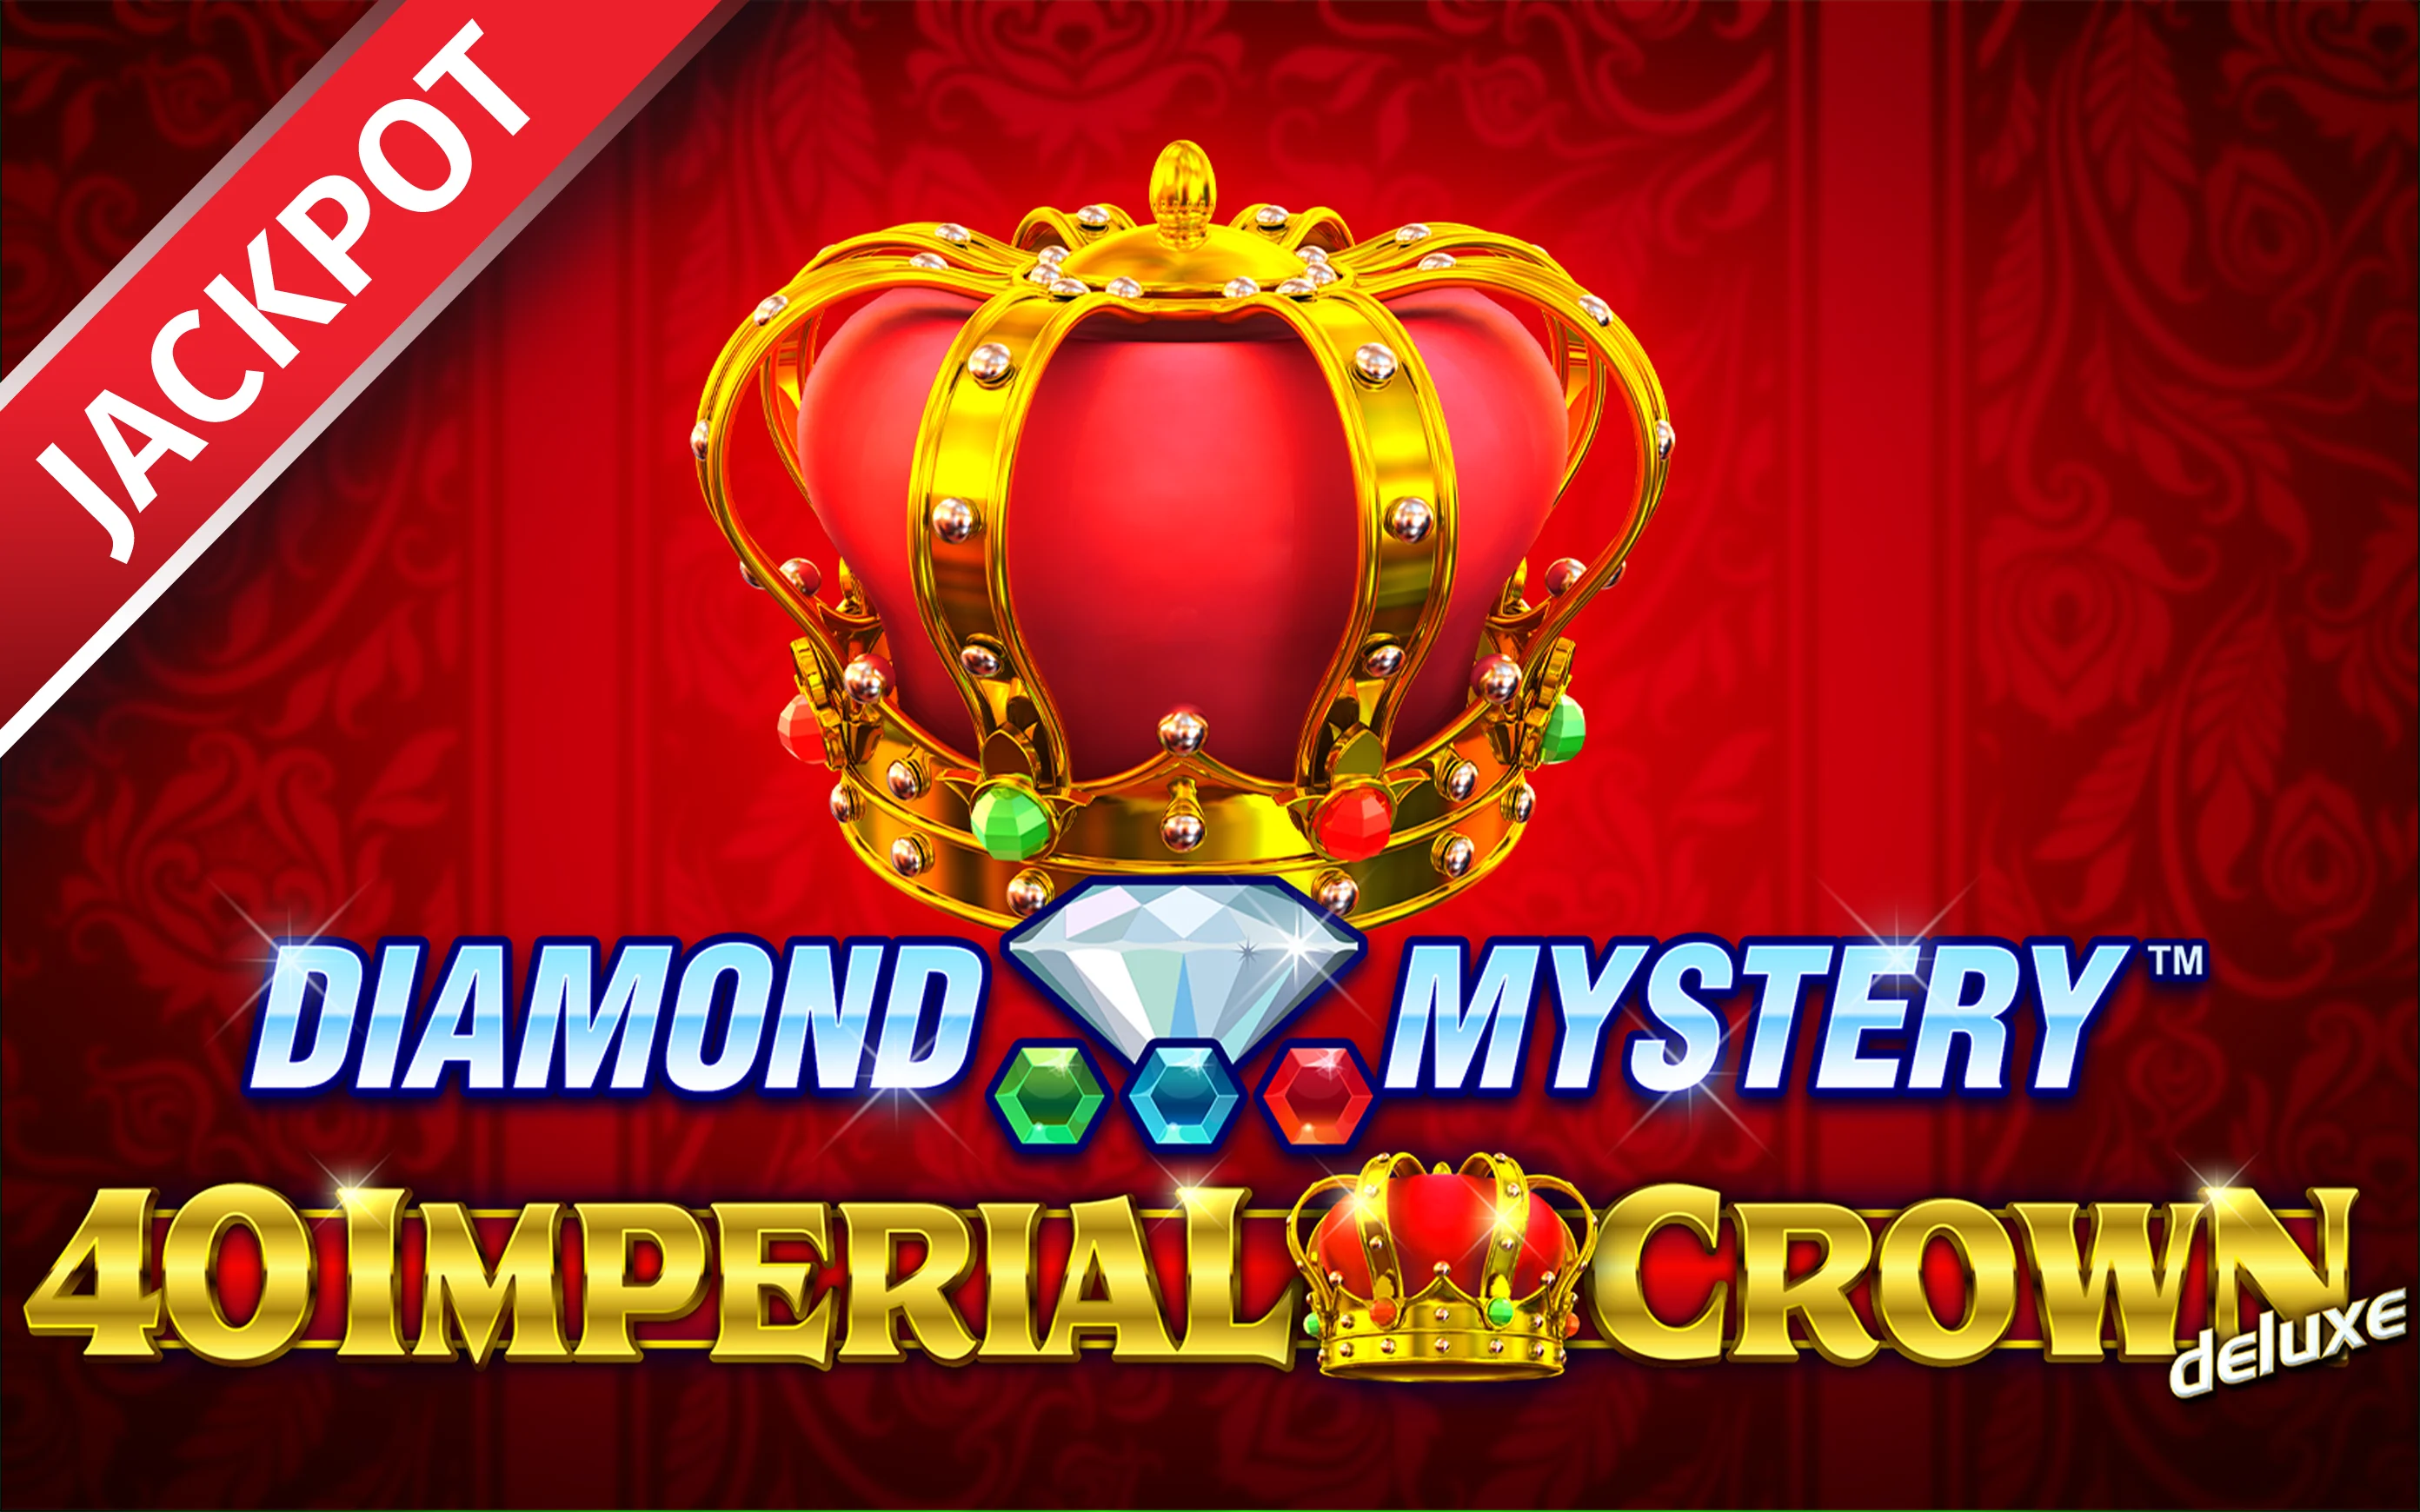 Грайте у Diamond Mystery™ – 40 Imperial Crown deluxe в онлайн-казино Starcasino.be